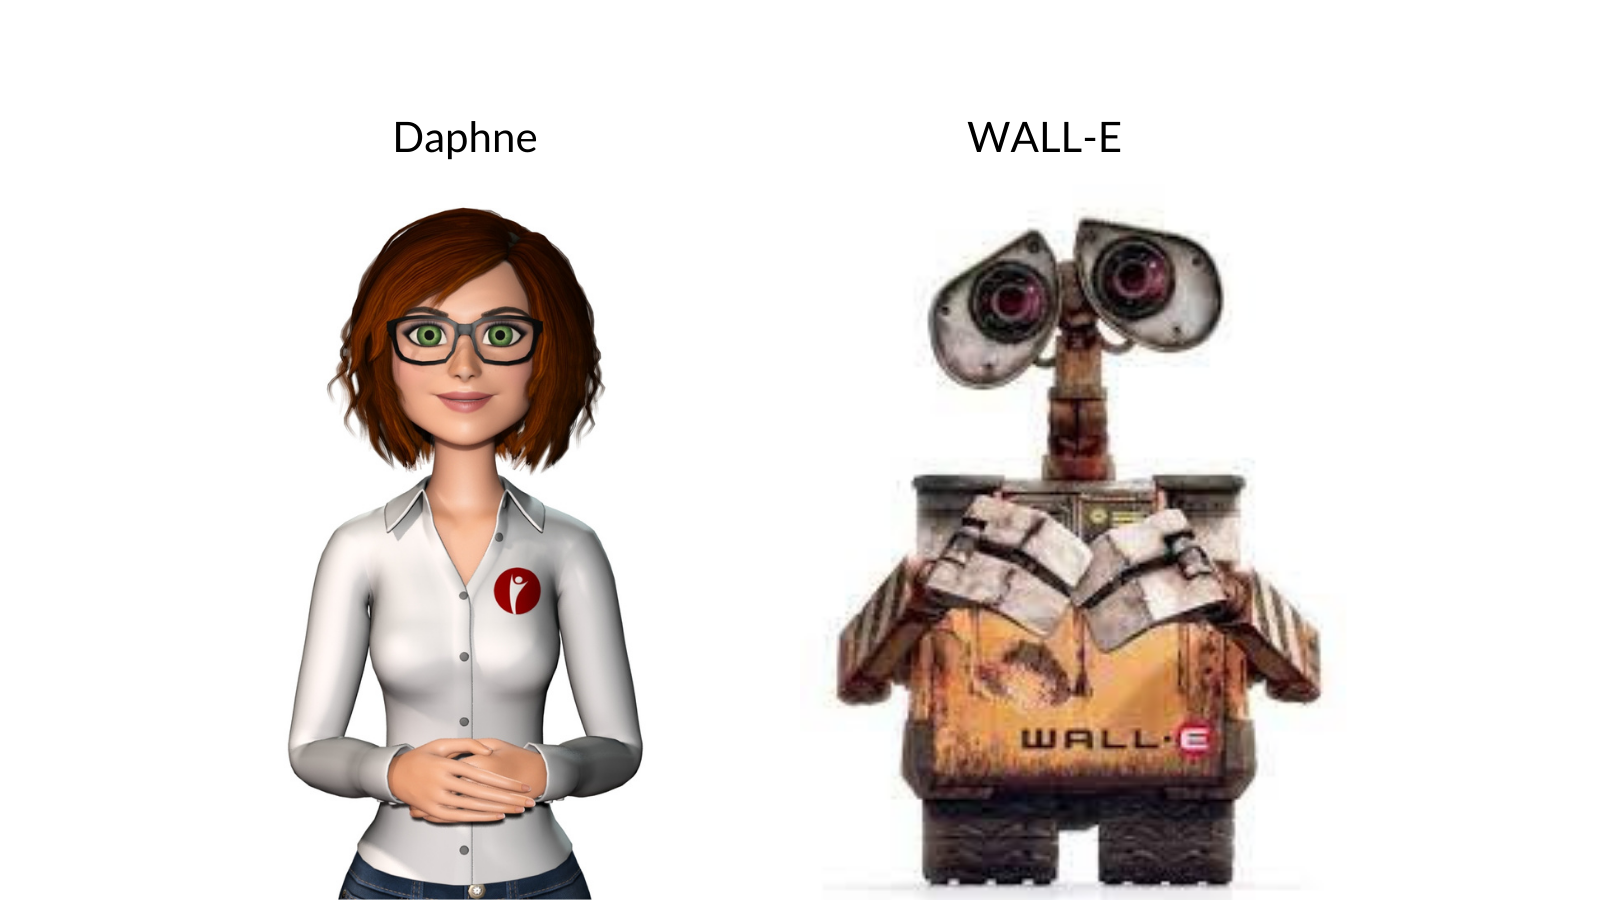 Wall-E and Daphne